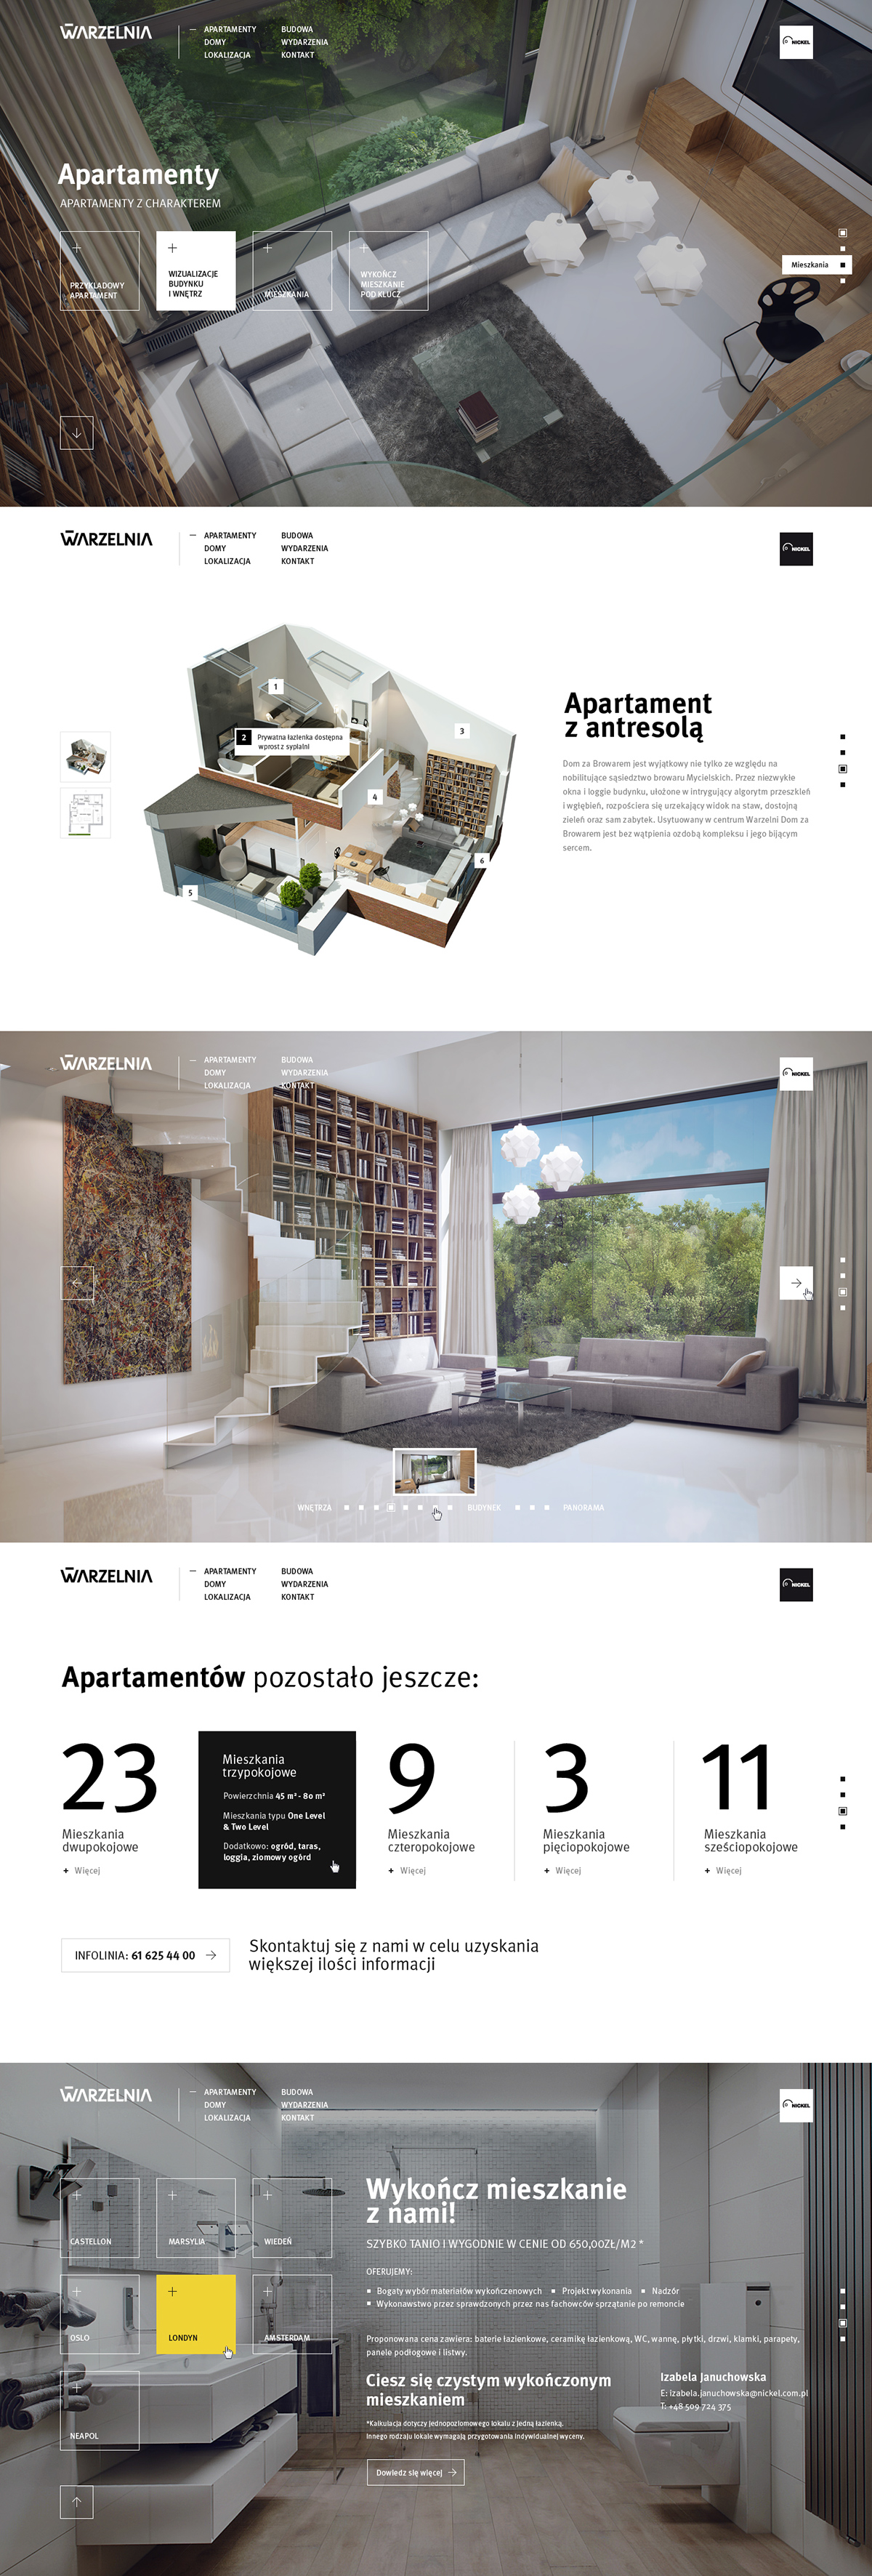 flat apartaments luxury warzelnia development poznan Real estate